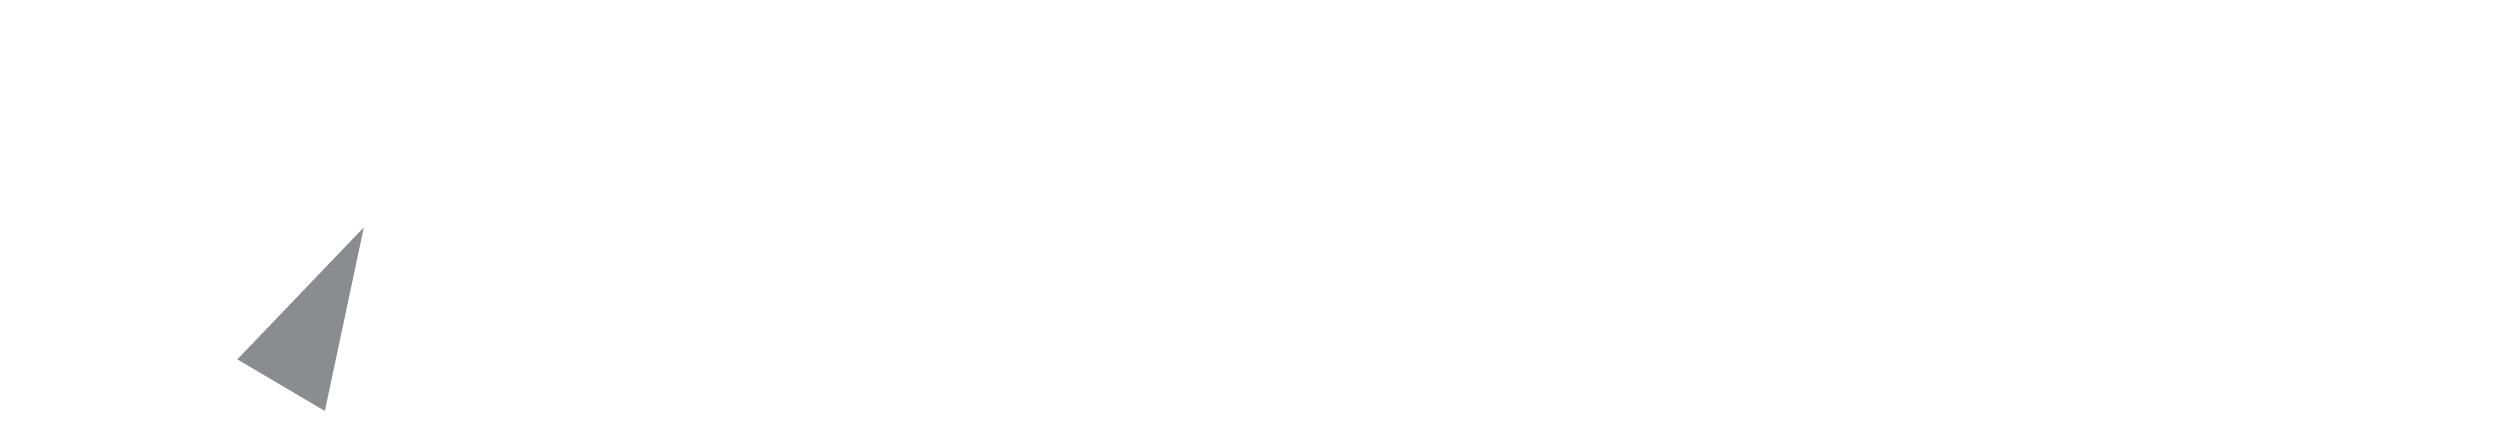 Logo Atlantis University Horizontal Blanco 01 1